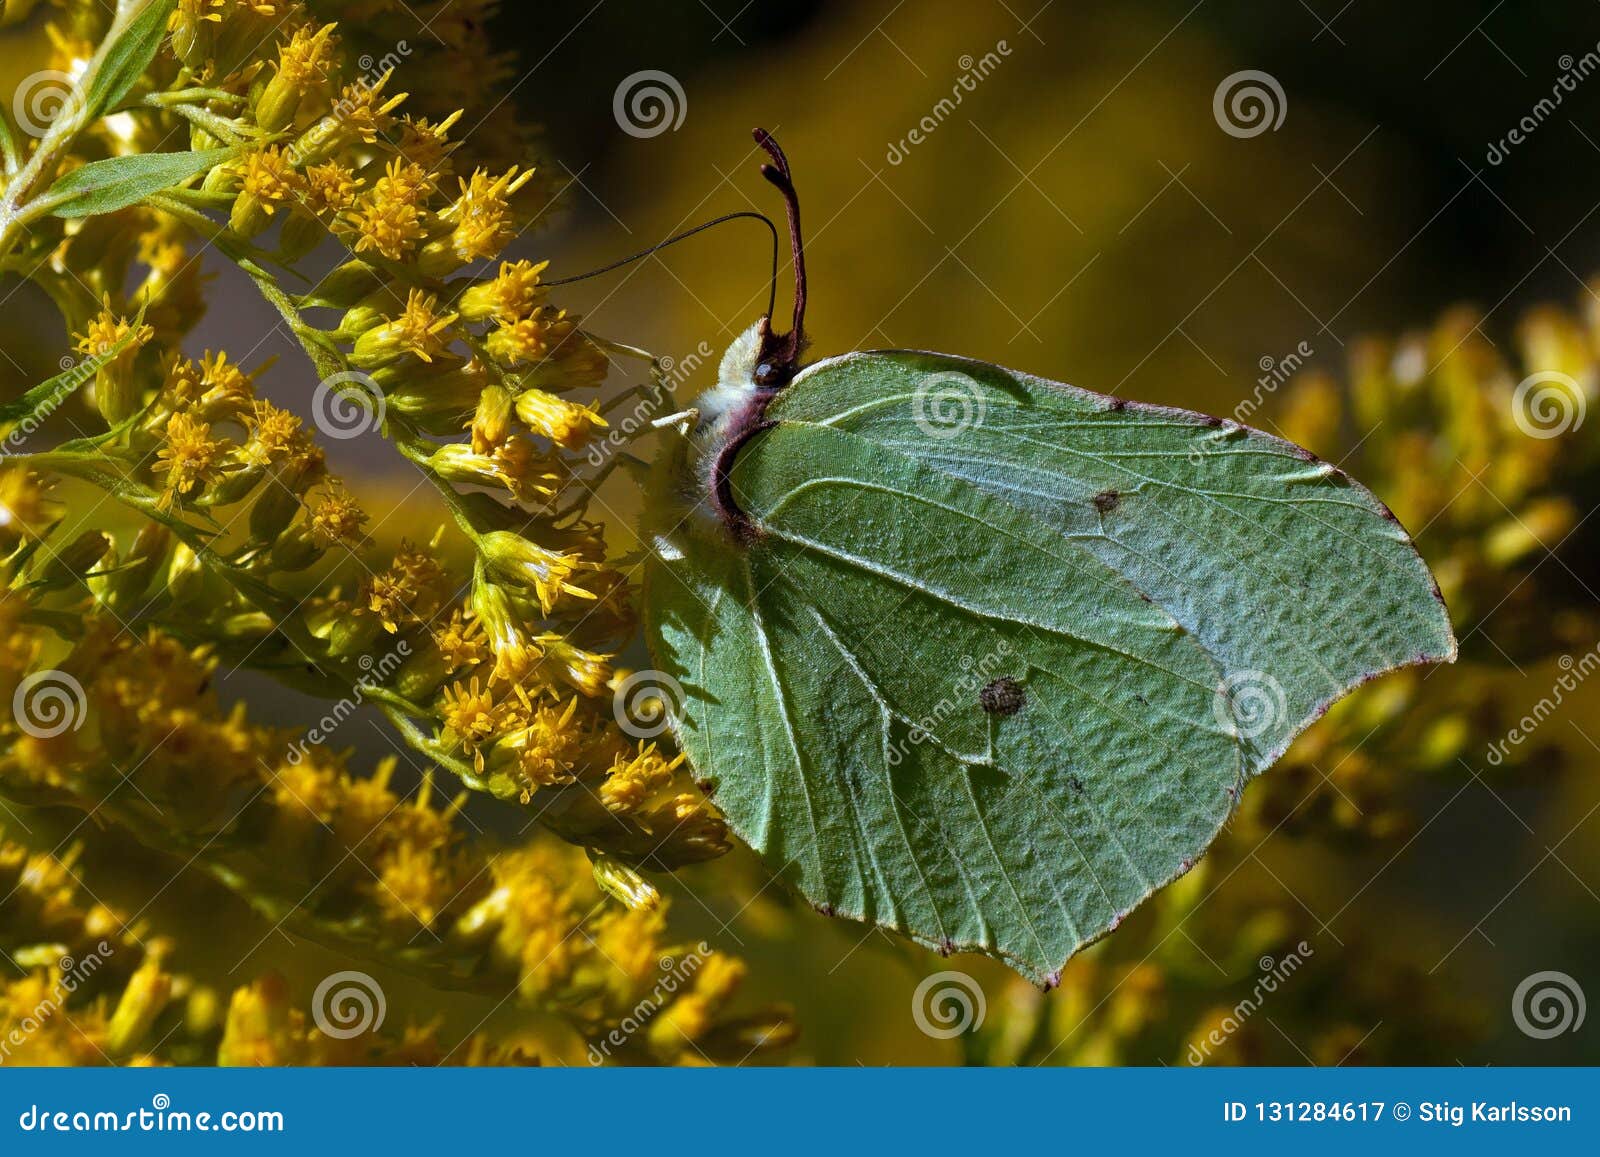 brimstone butterfly, gonepteryx rhamni on the flower